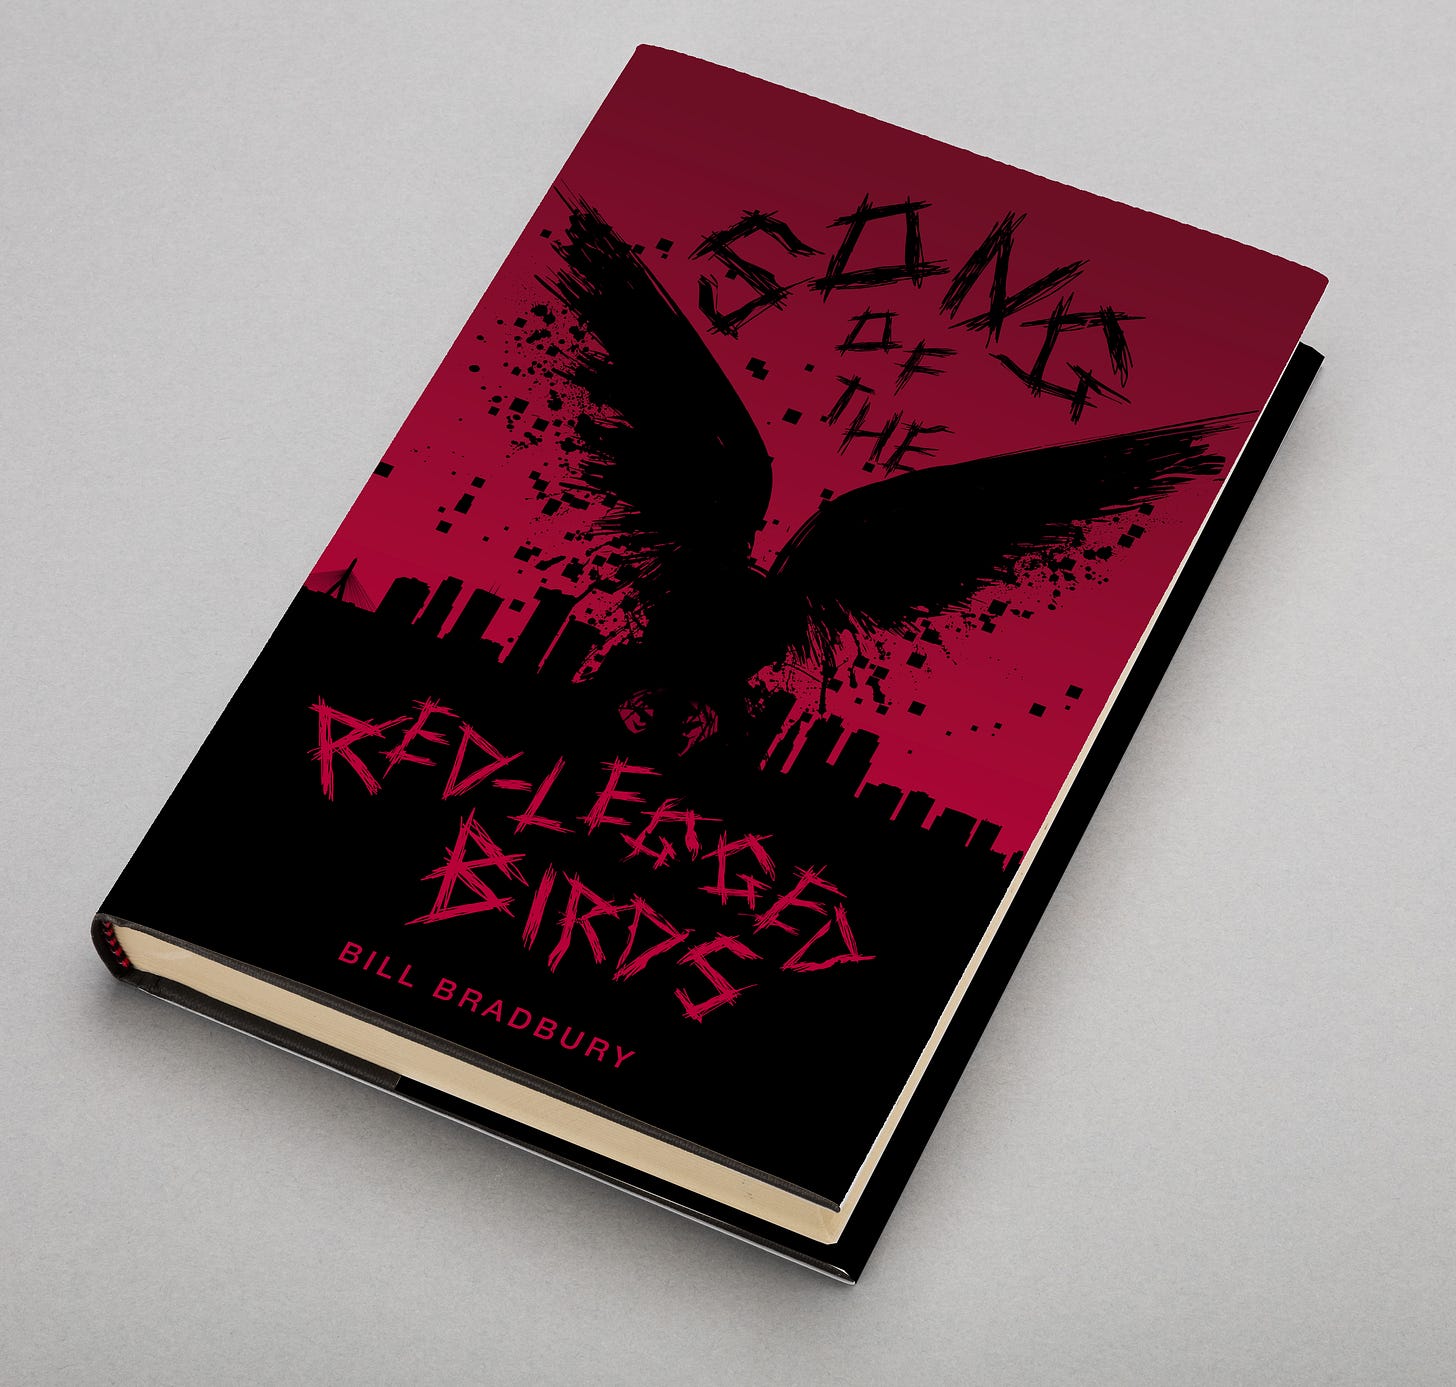 Song of the Red-Legged Birds by Bill Bradbury